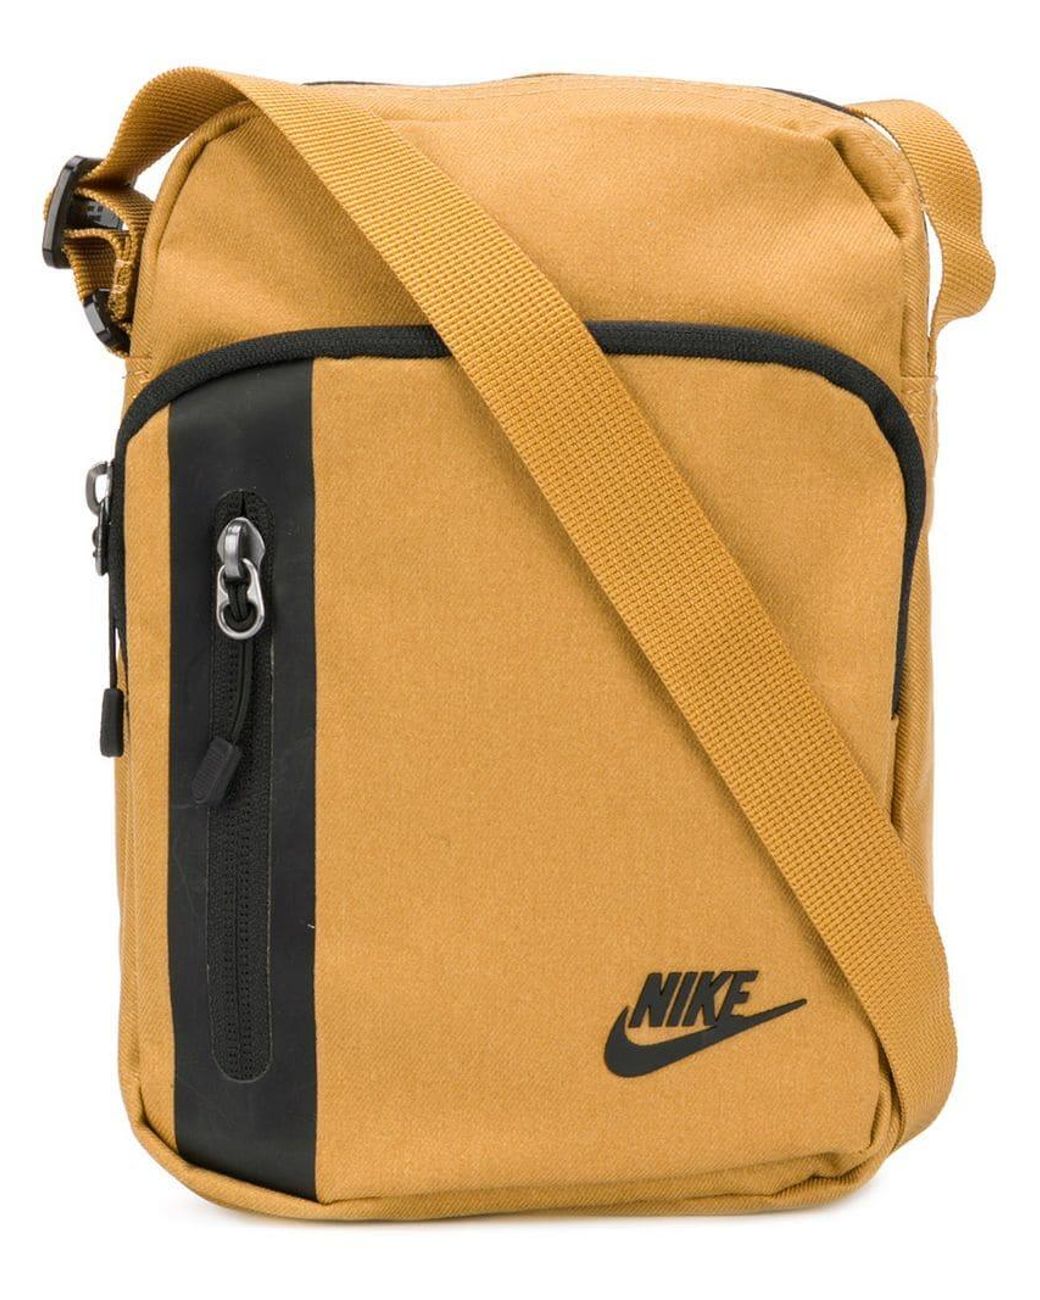 Nike Men's Yellow Core Small Items 3.0 Bag